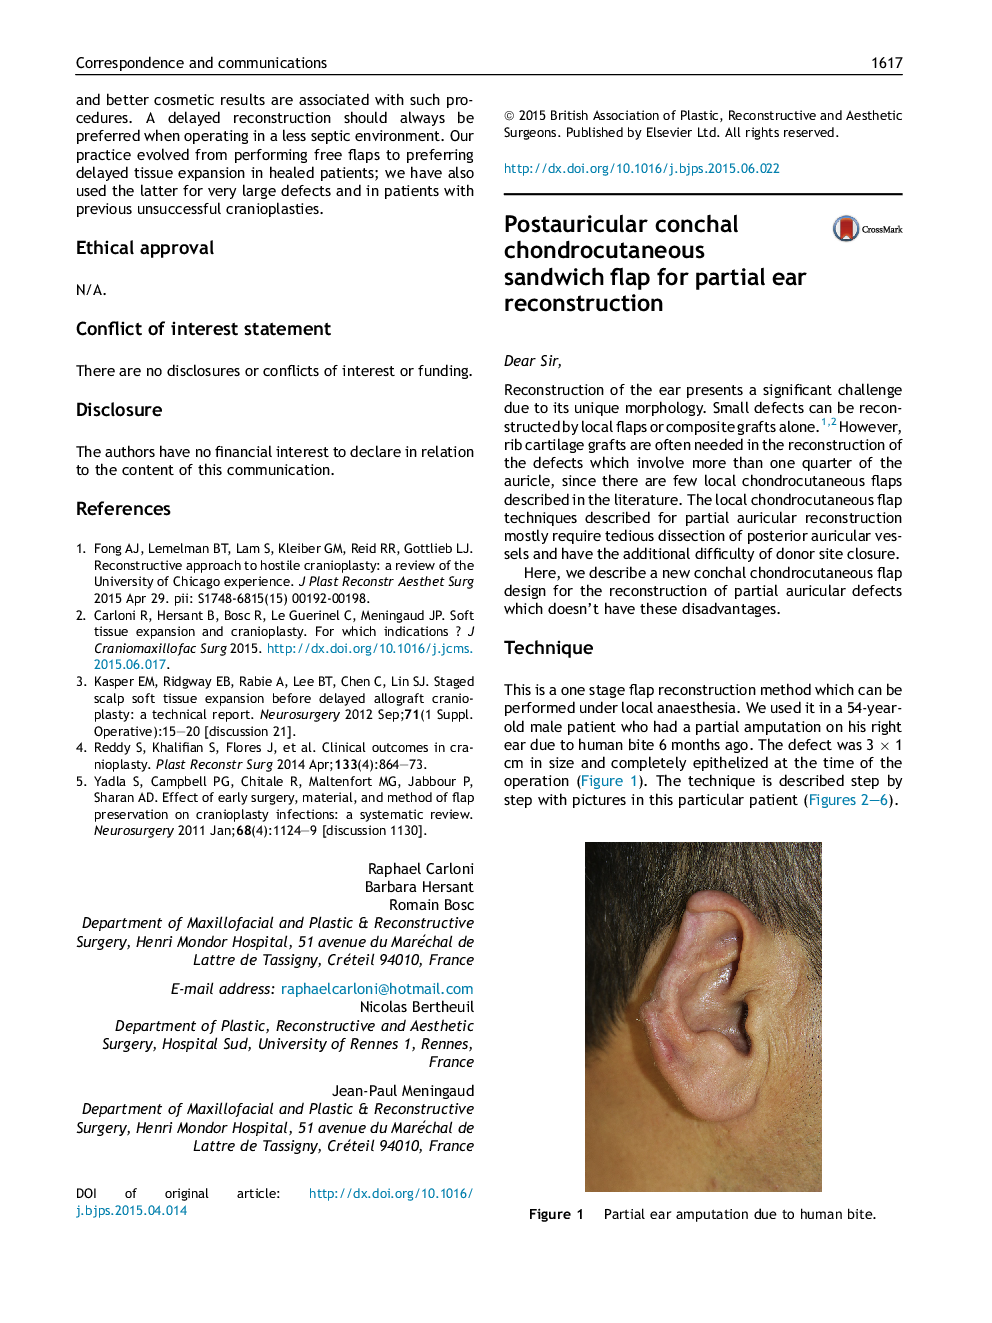 Postauricular conchal chondrocutaneous sandwich flap for partial ear reconstruction